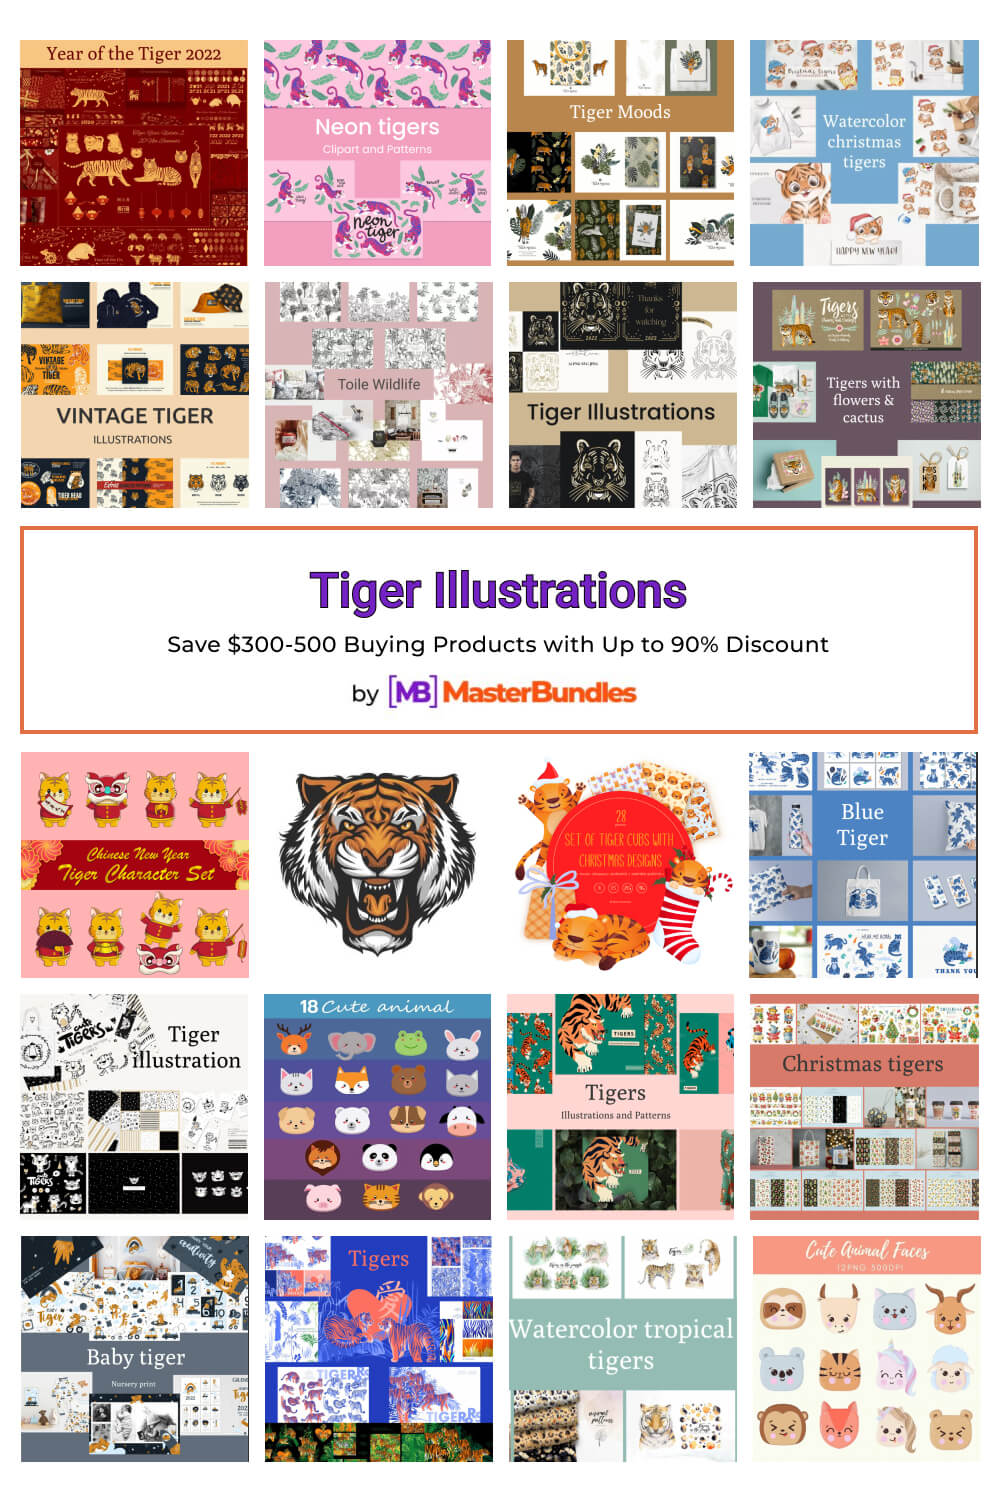 tiger illustrations pinterest image.